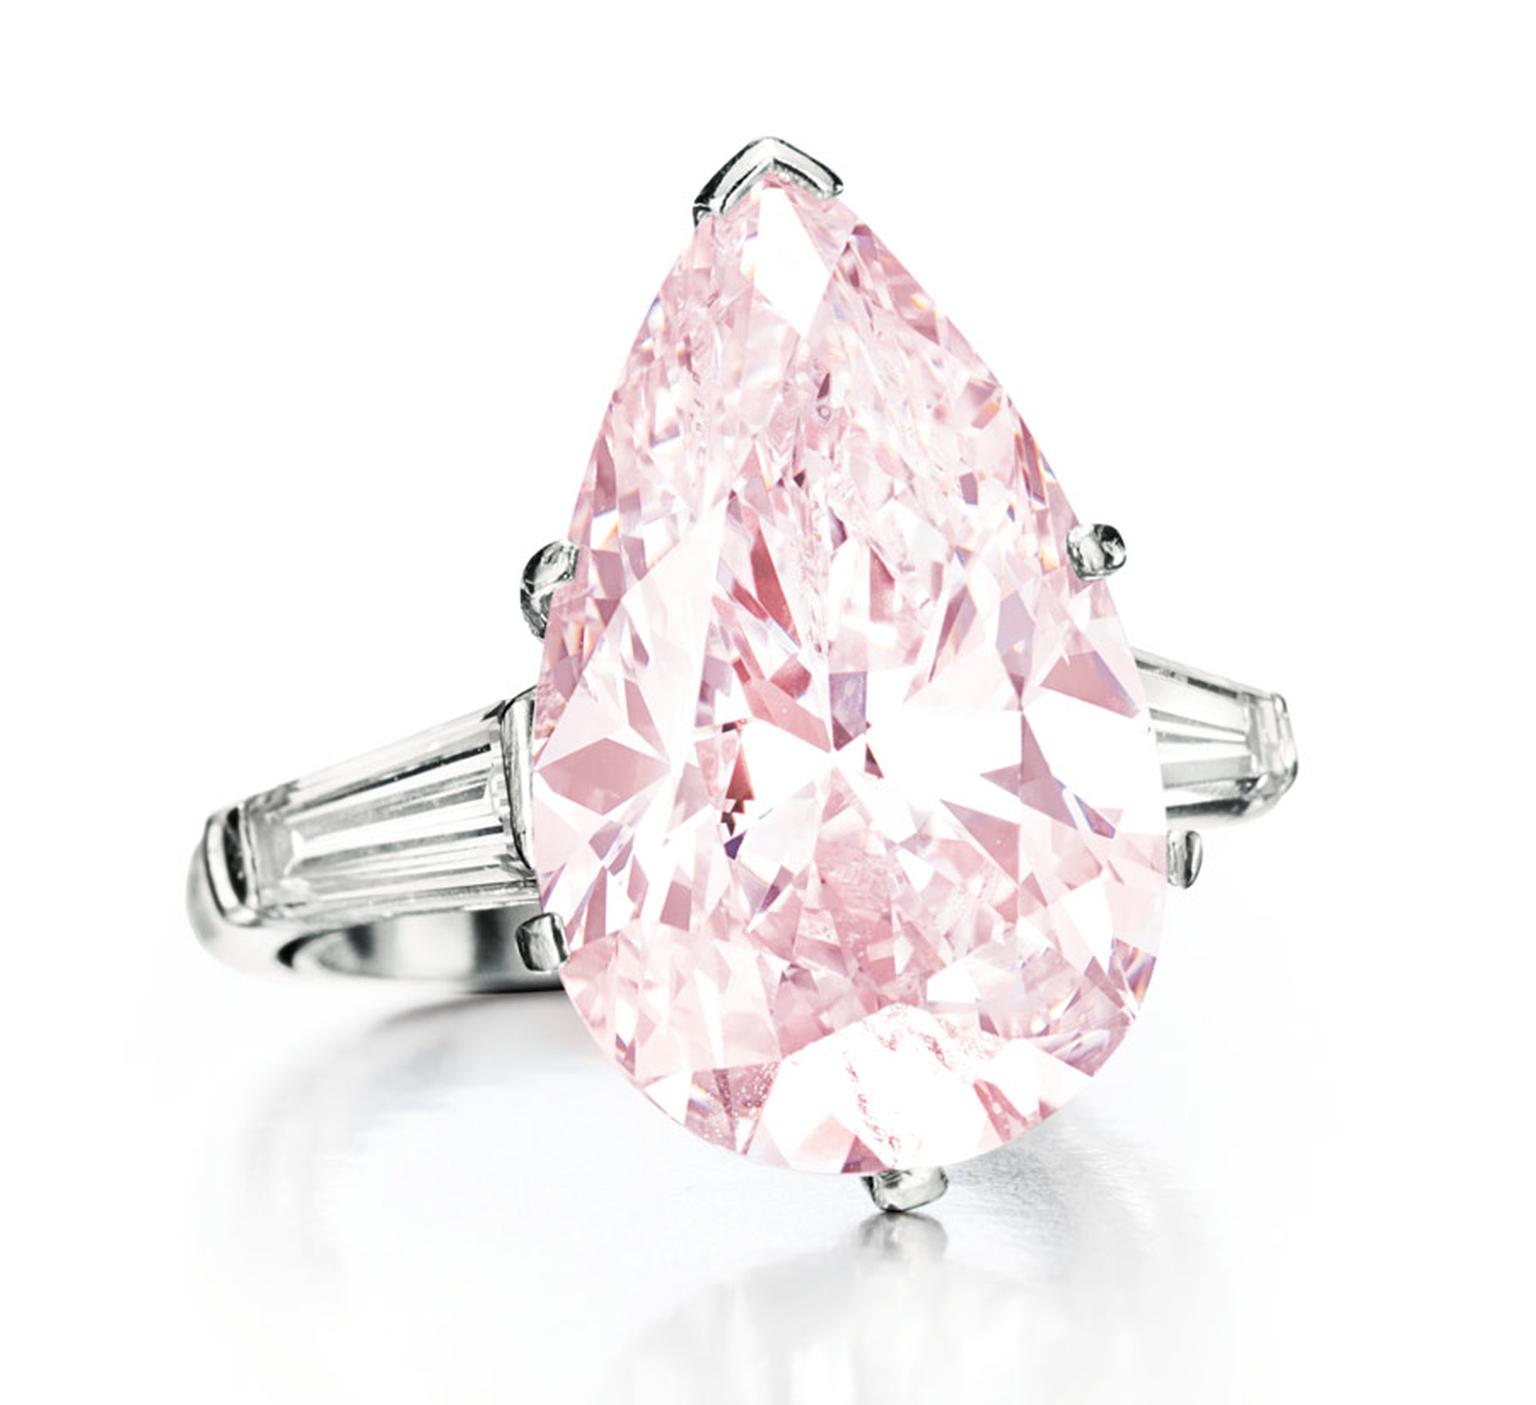 Christies-Pear-Shaped-Fancy-Light-Pink-Diamond-Ring